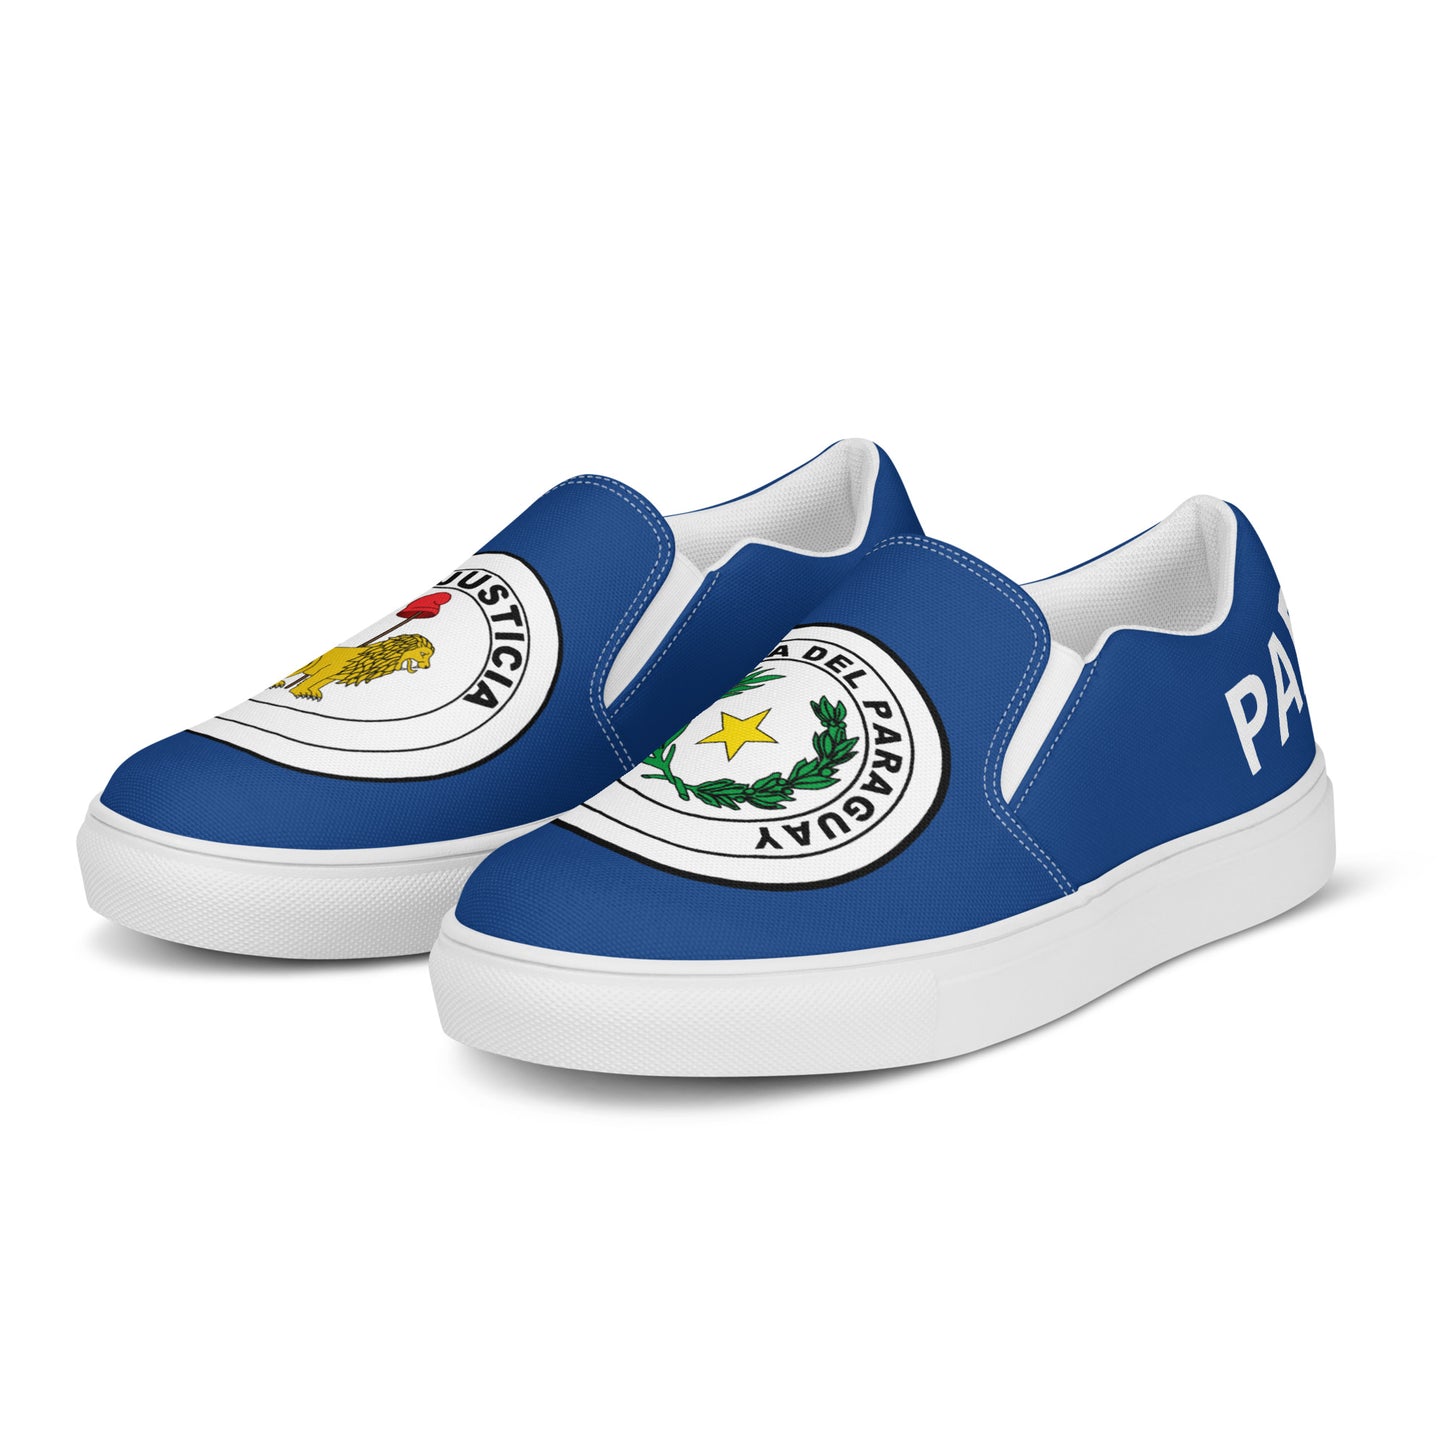 Paraguay - Women - Blue - Slip-on shoes